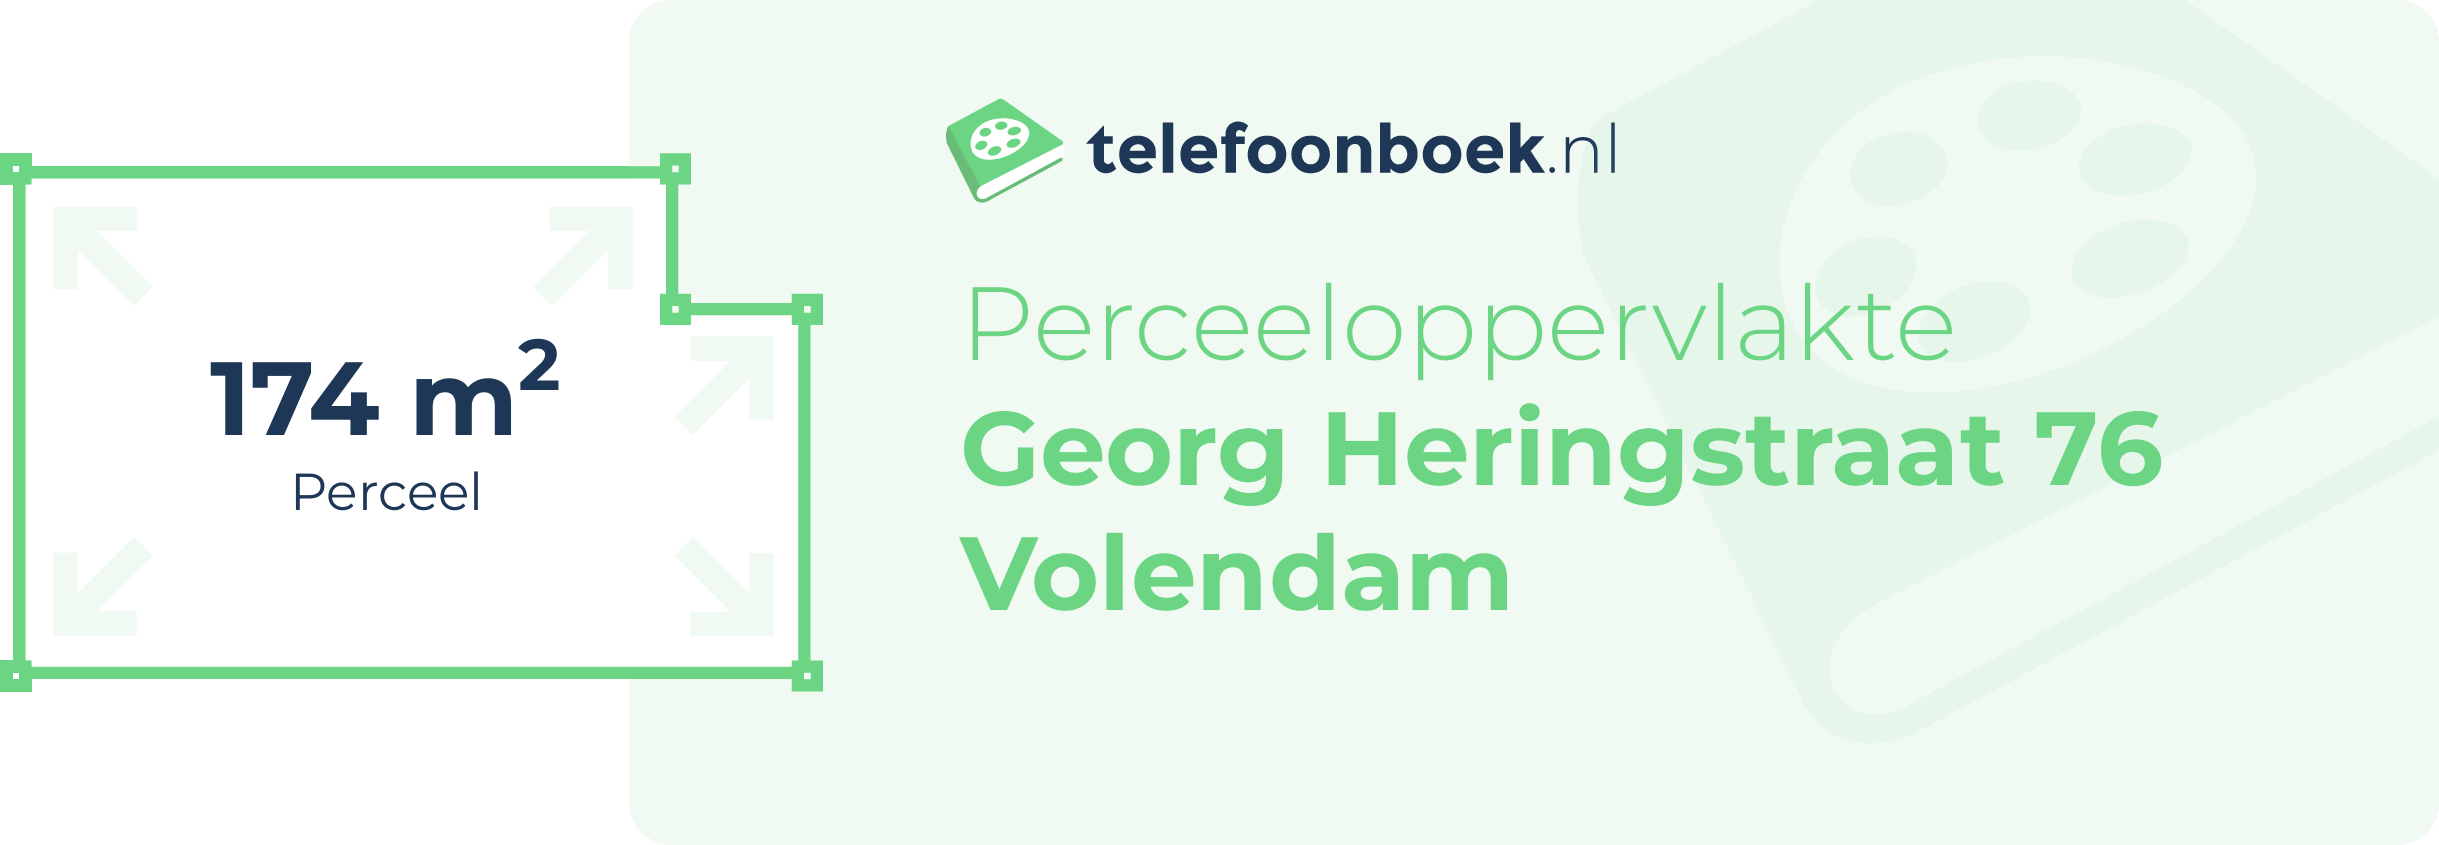 Perceeloppervlakte Georg Heringstraat 76 Volendam